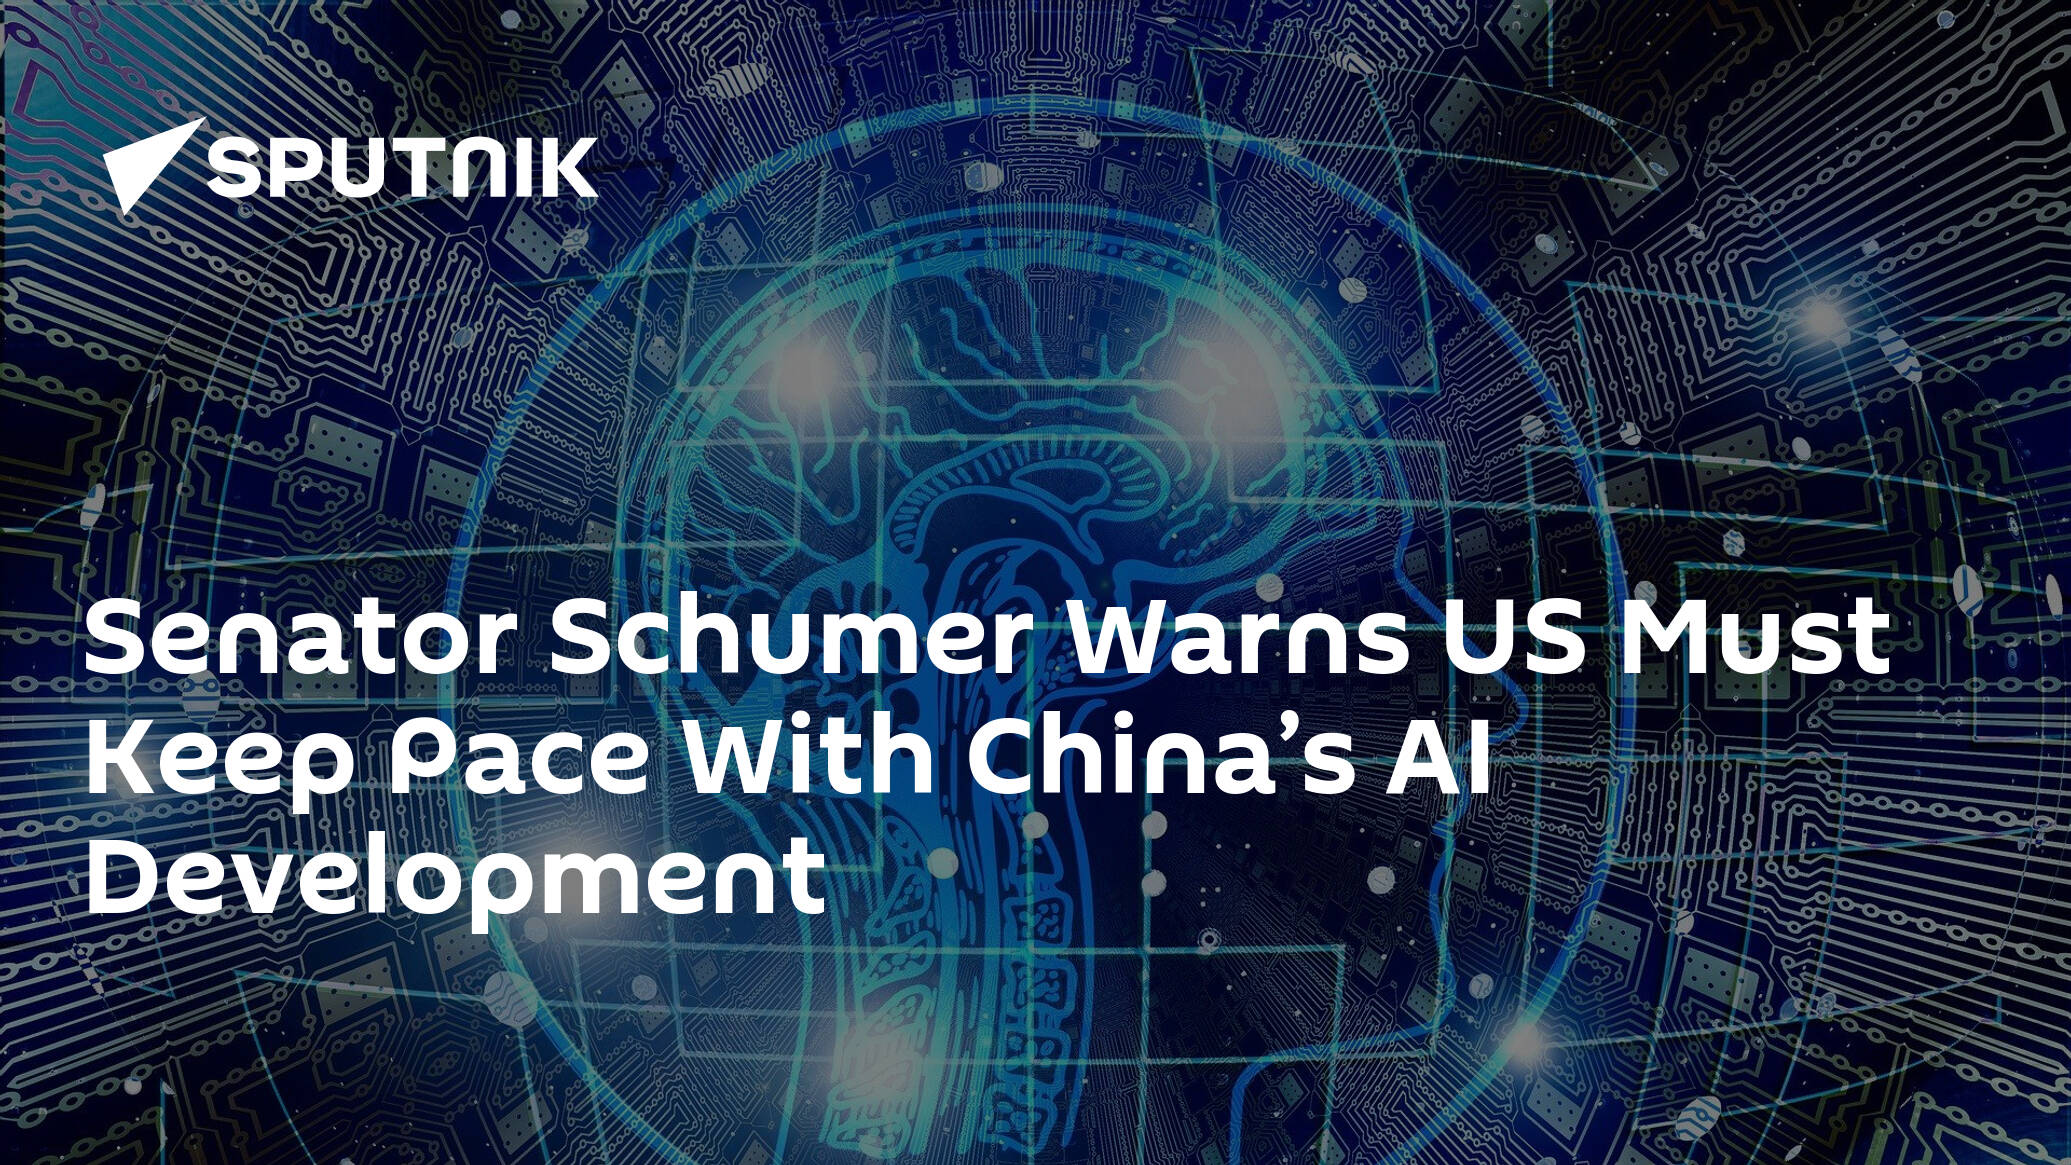 Senator Schumer Warns US Must Keep Pace With China’s AI Development